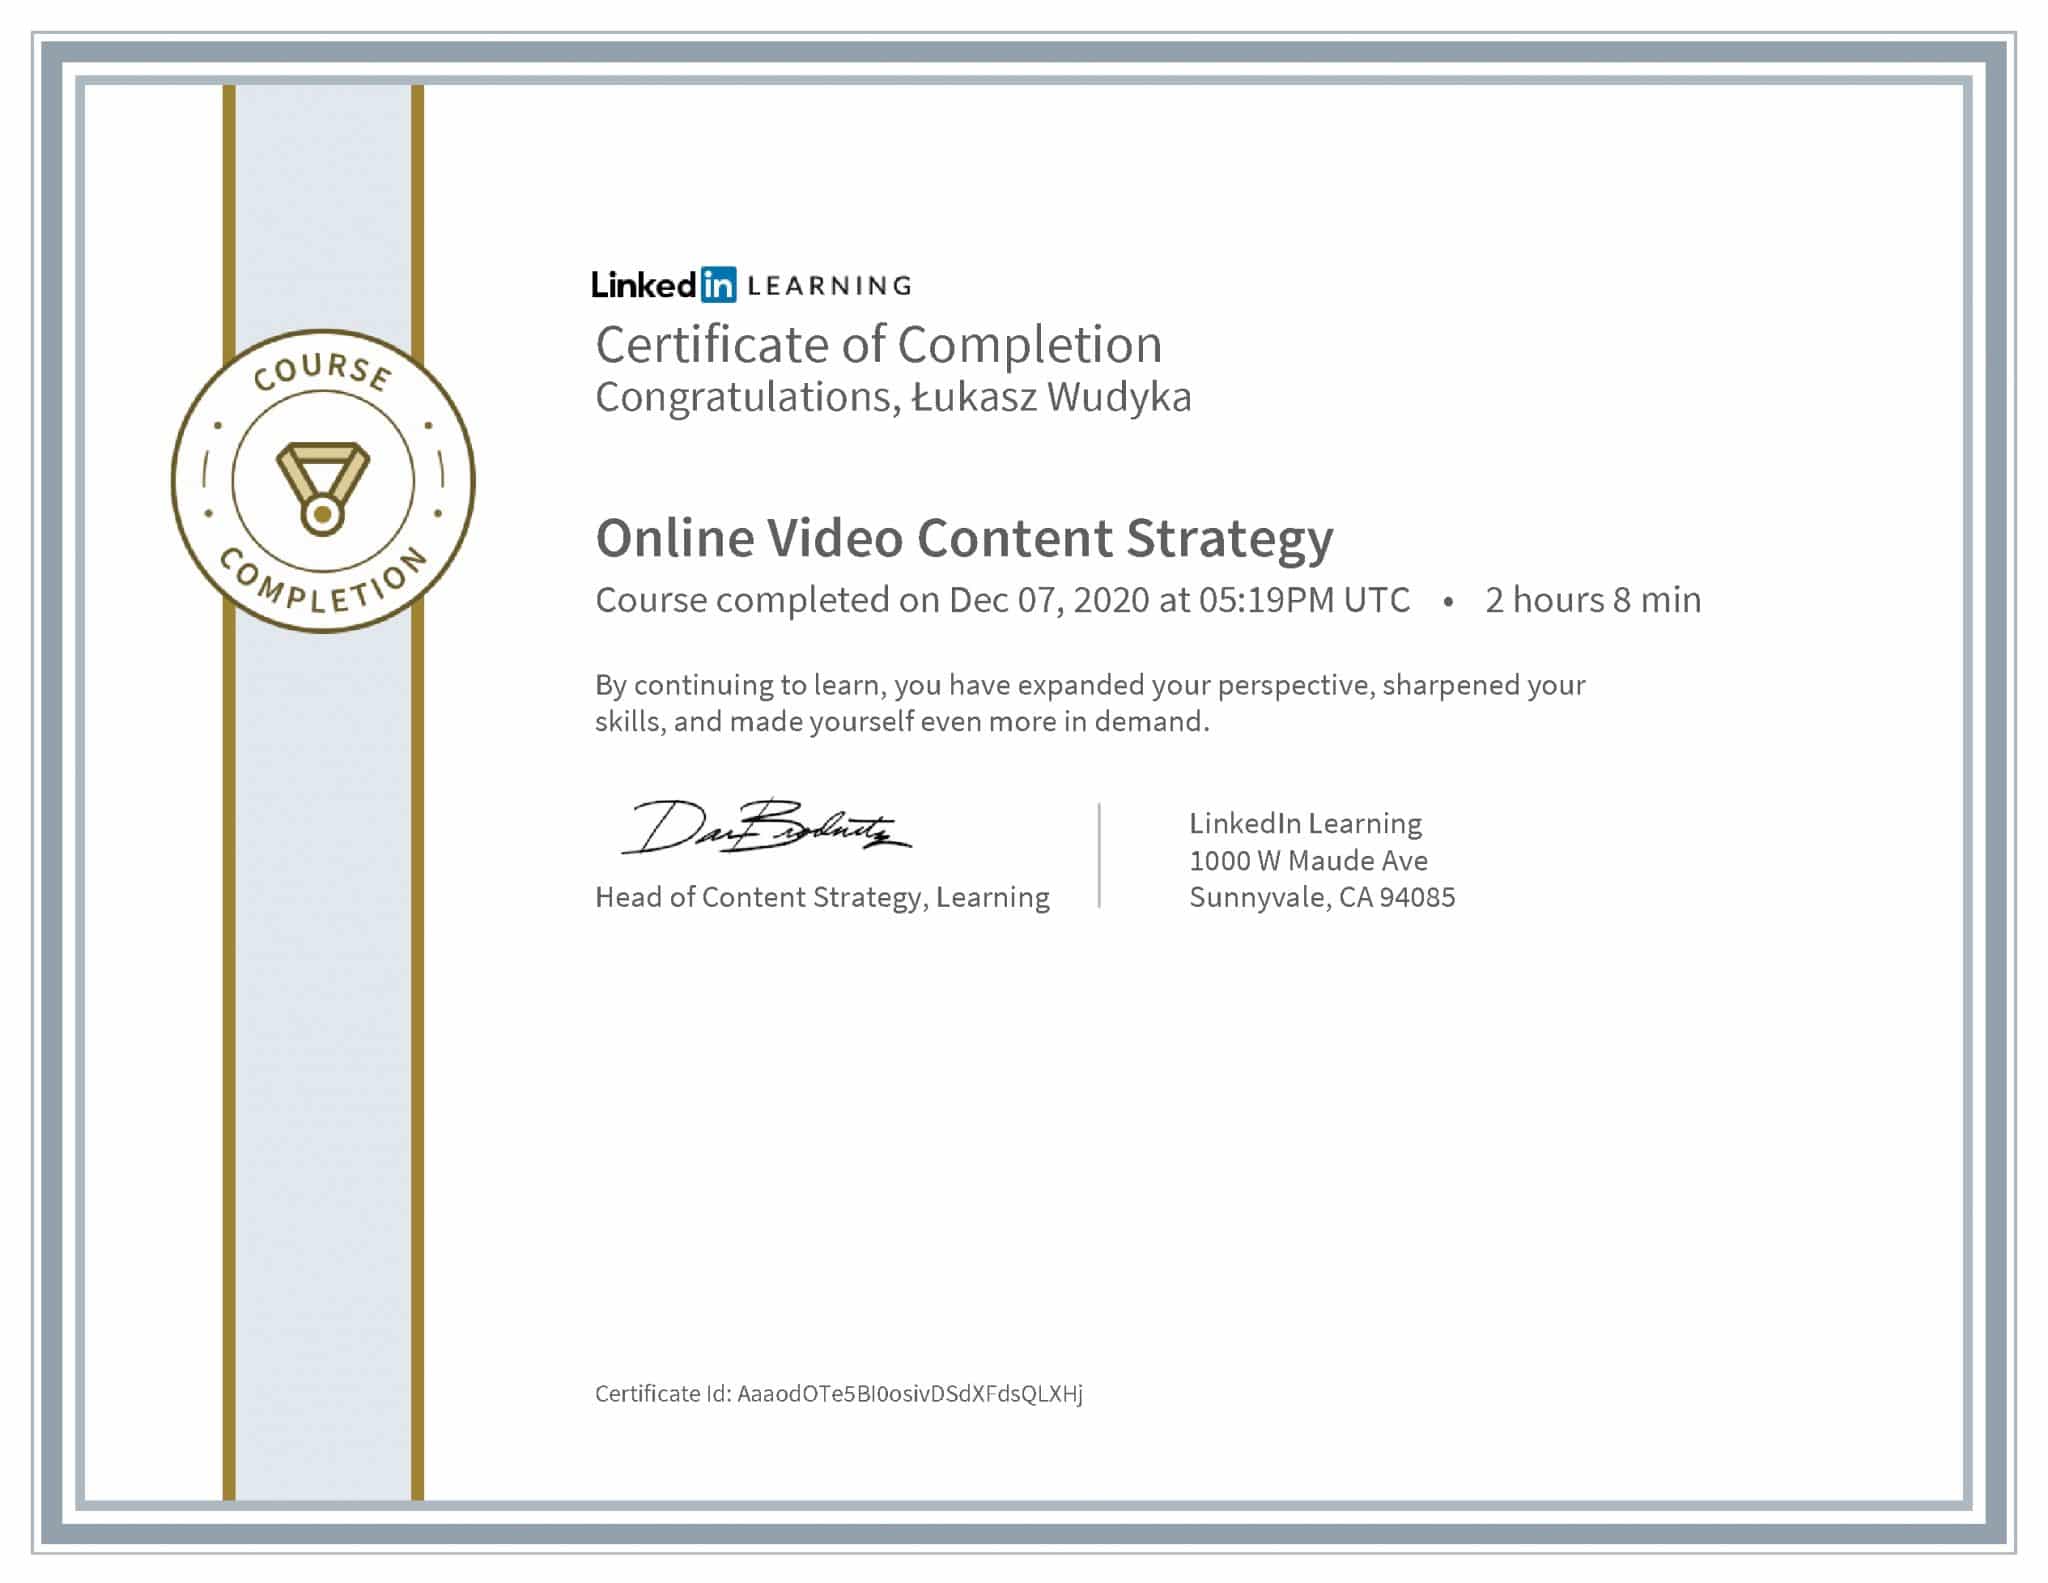 Łukasz Wudyka certyfikat LinkedIn Online Video Content Strategy